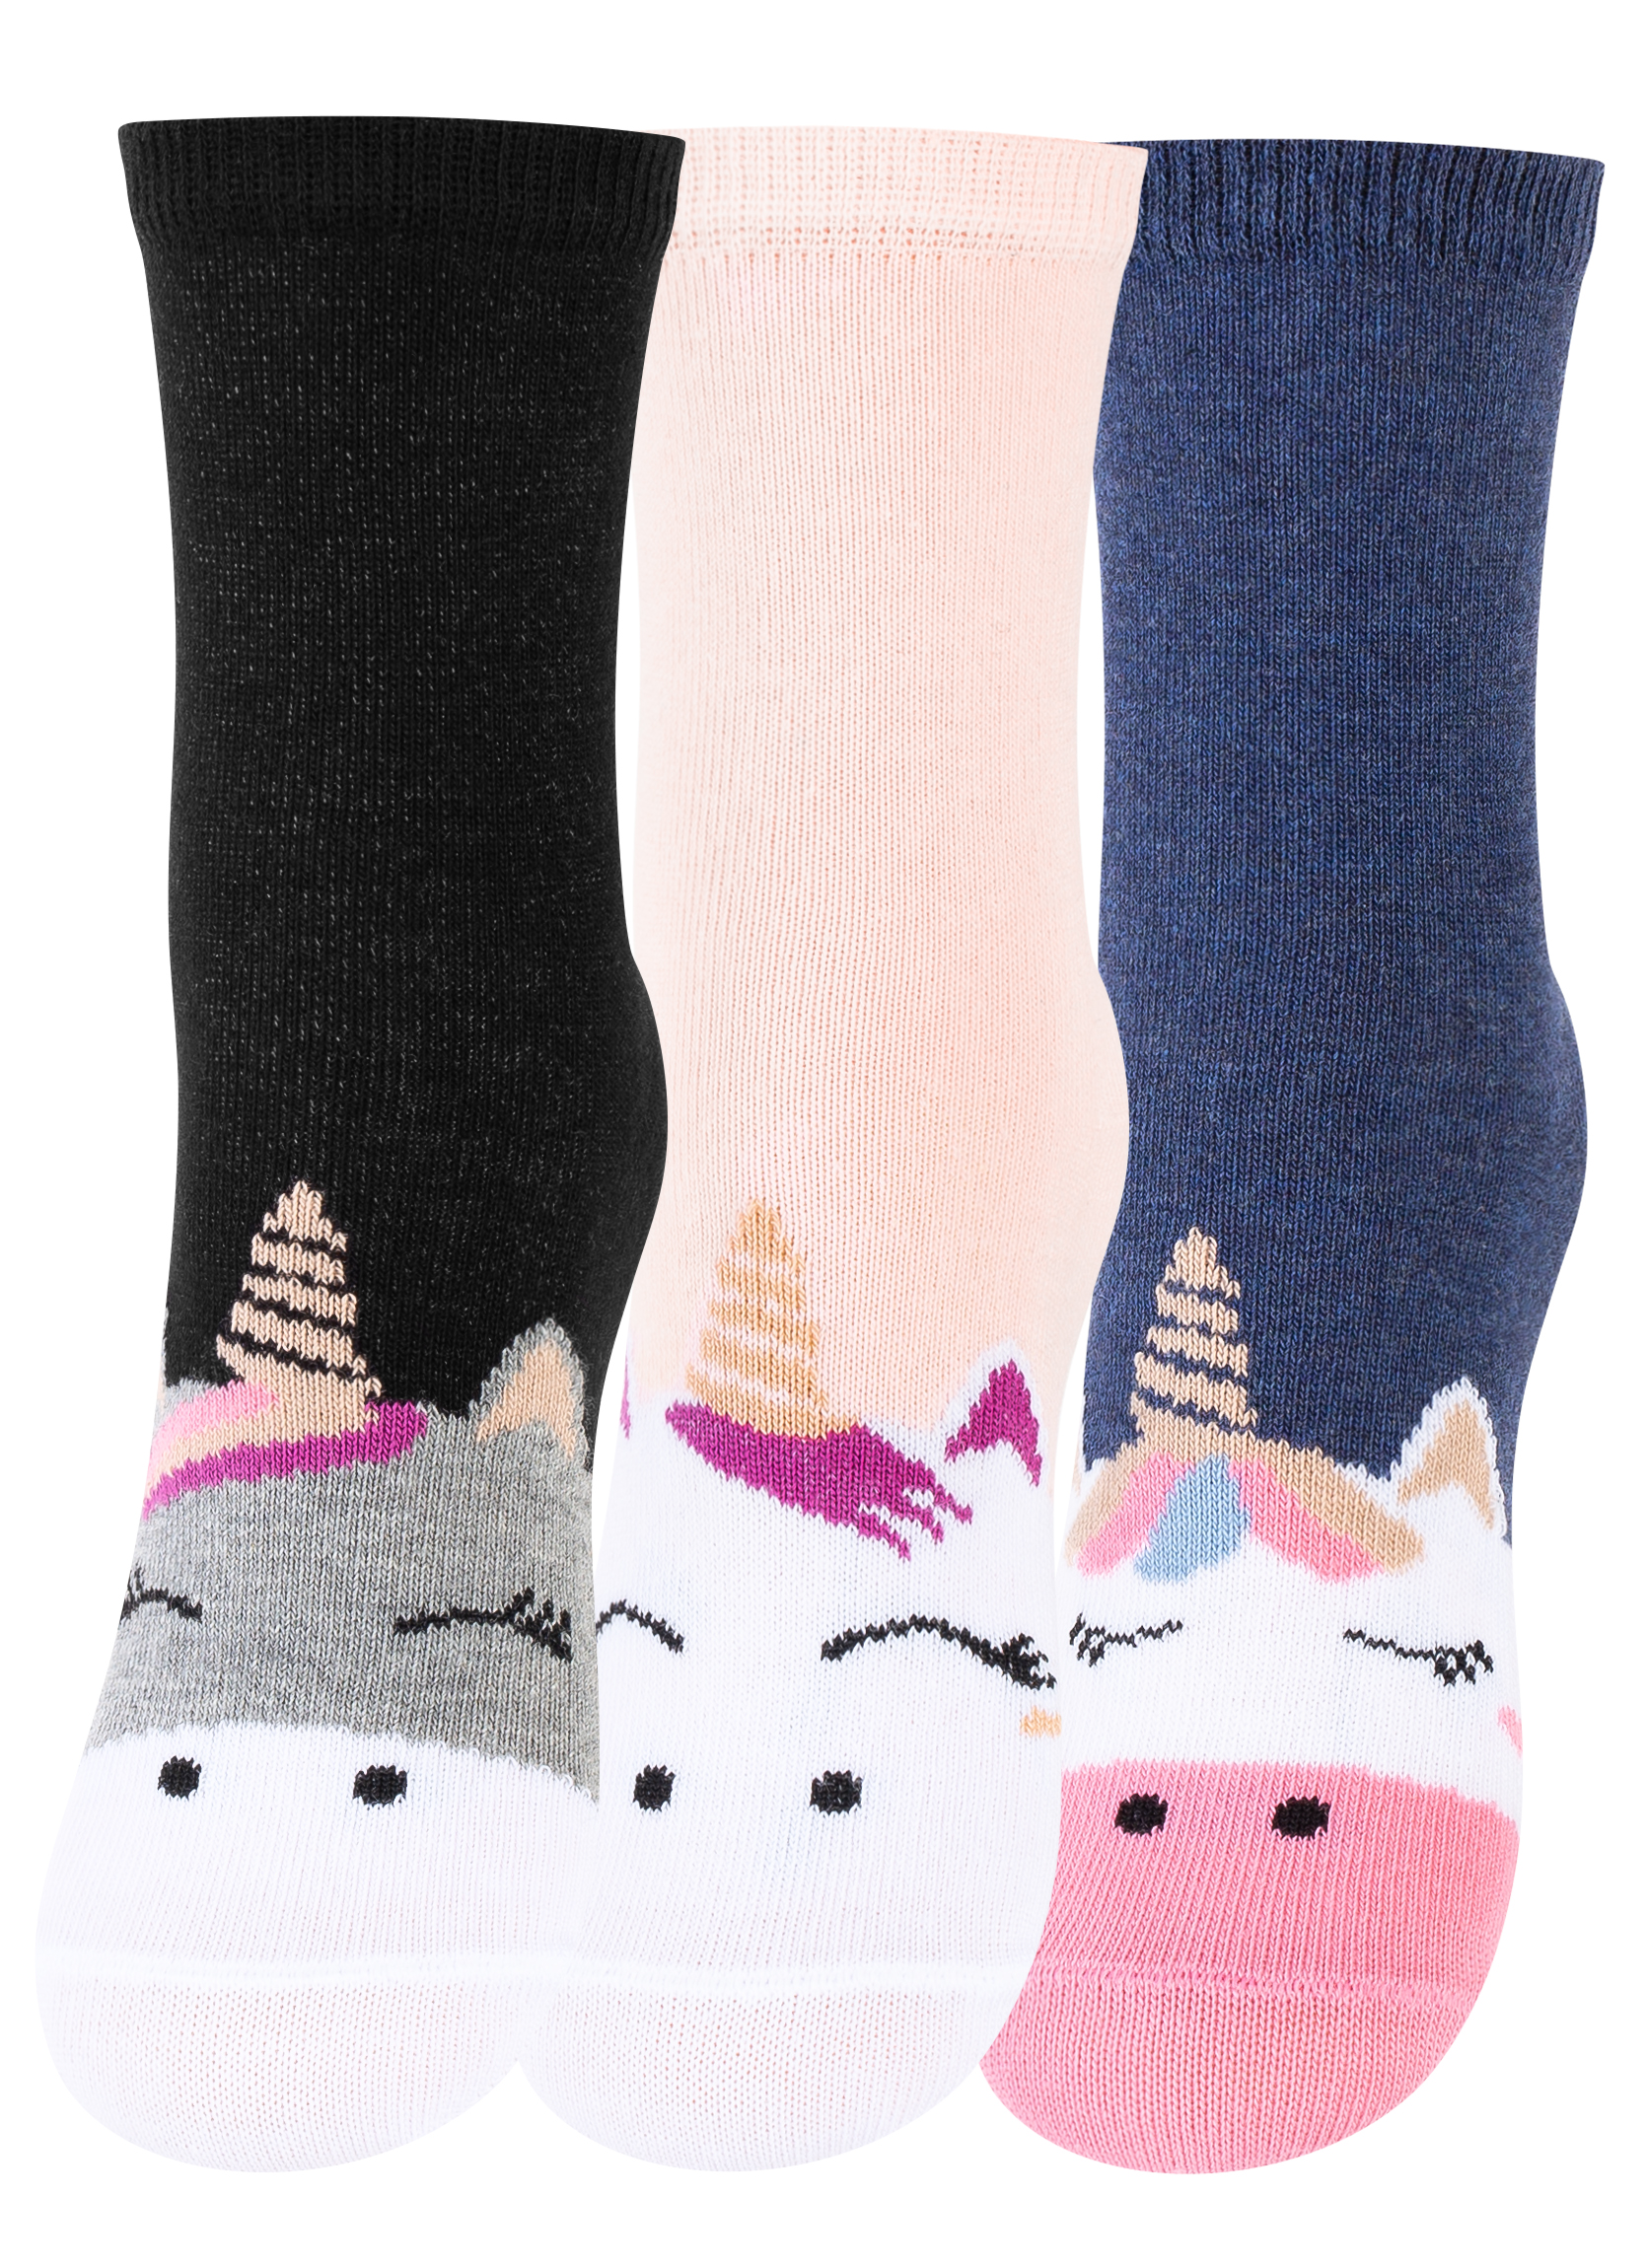 - Söckchen Socken Strumpfwaren Paar | Kinder | Einhorn | KINDER 6